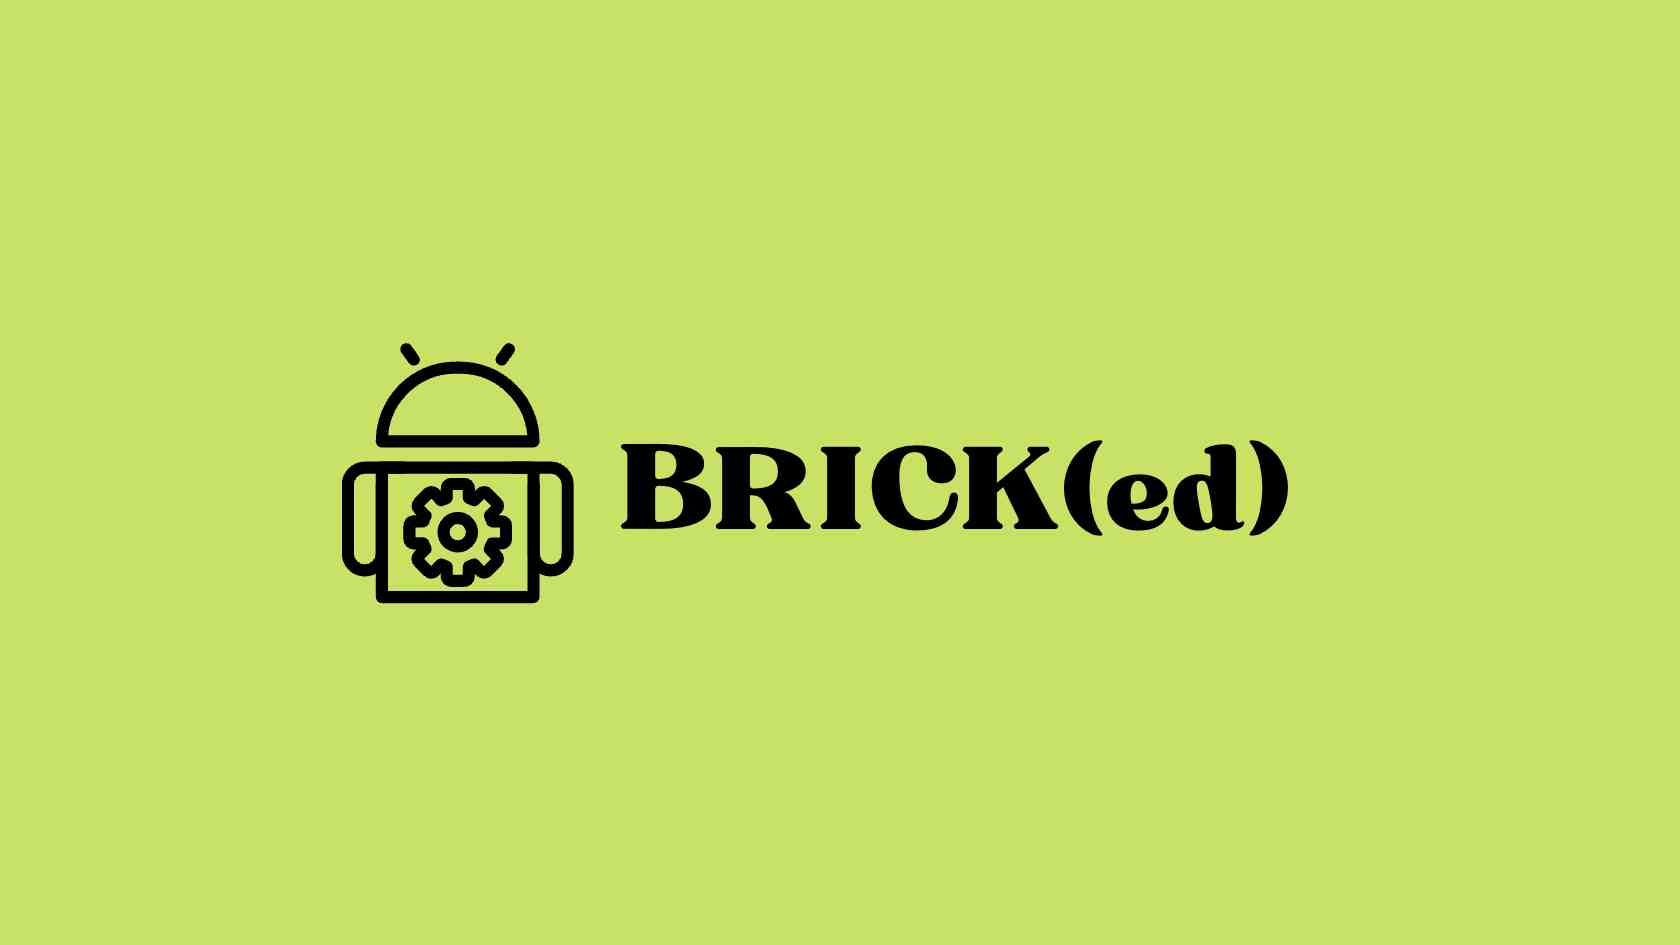 BRICK(ed)